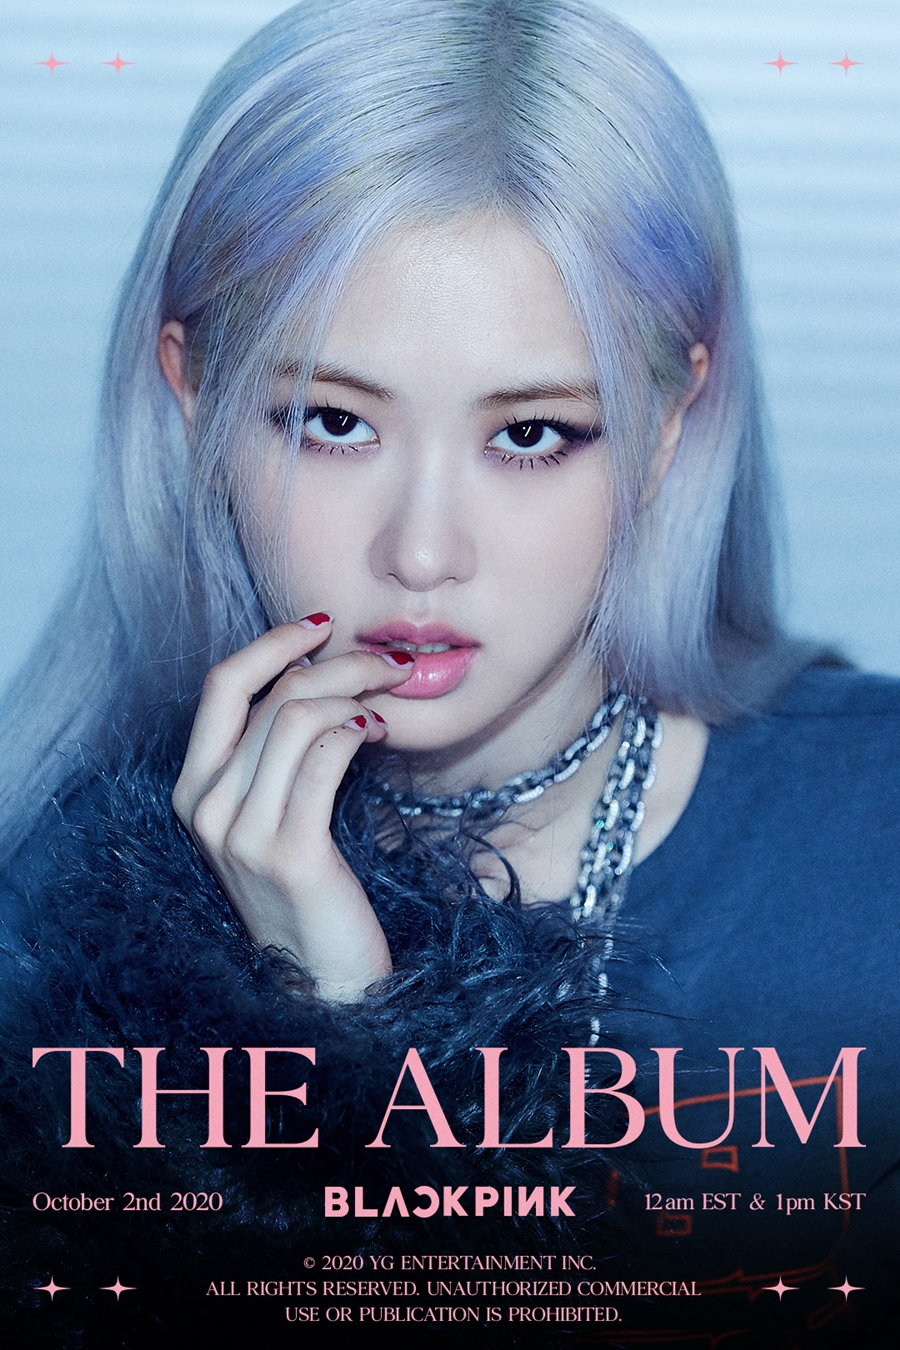 Chosun Online 朝鮮日報 アルバム発表間近のblackpink 魅惑的な銀髪のロゼvsダークなカリスマ漂うリサ